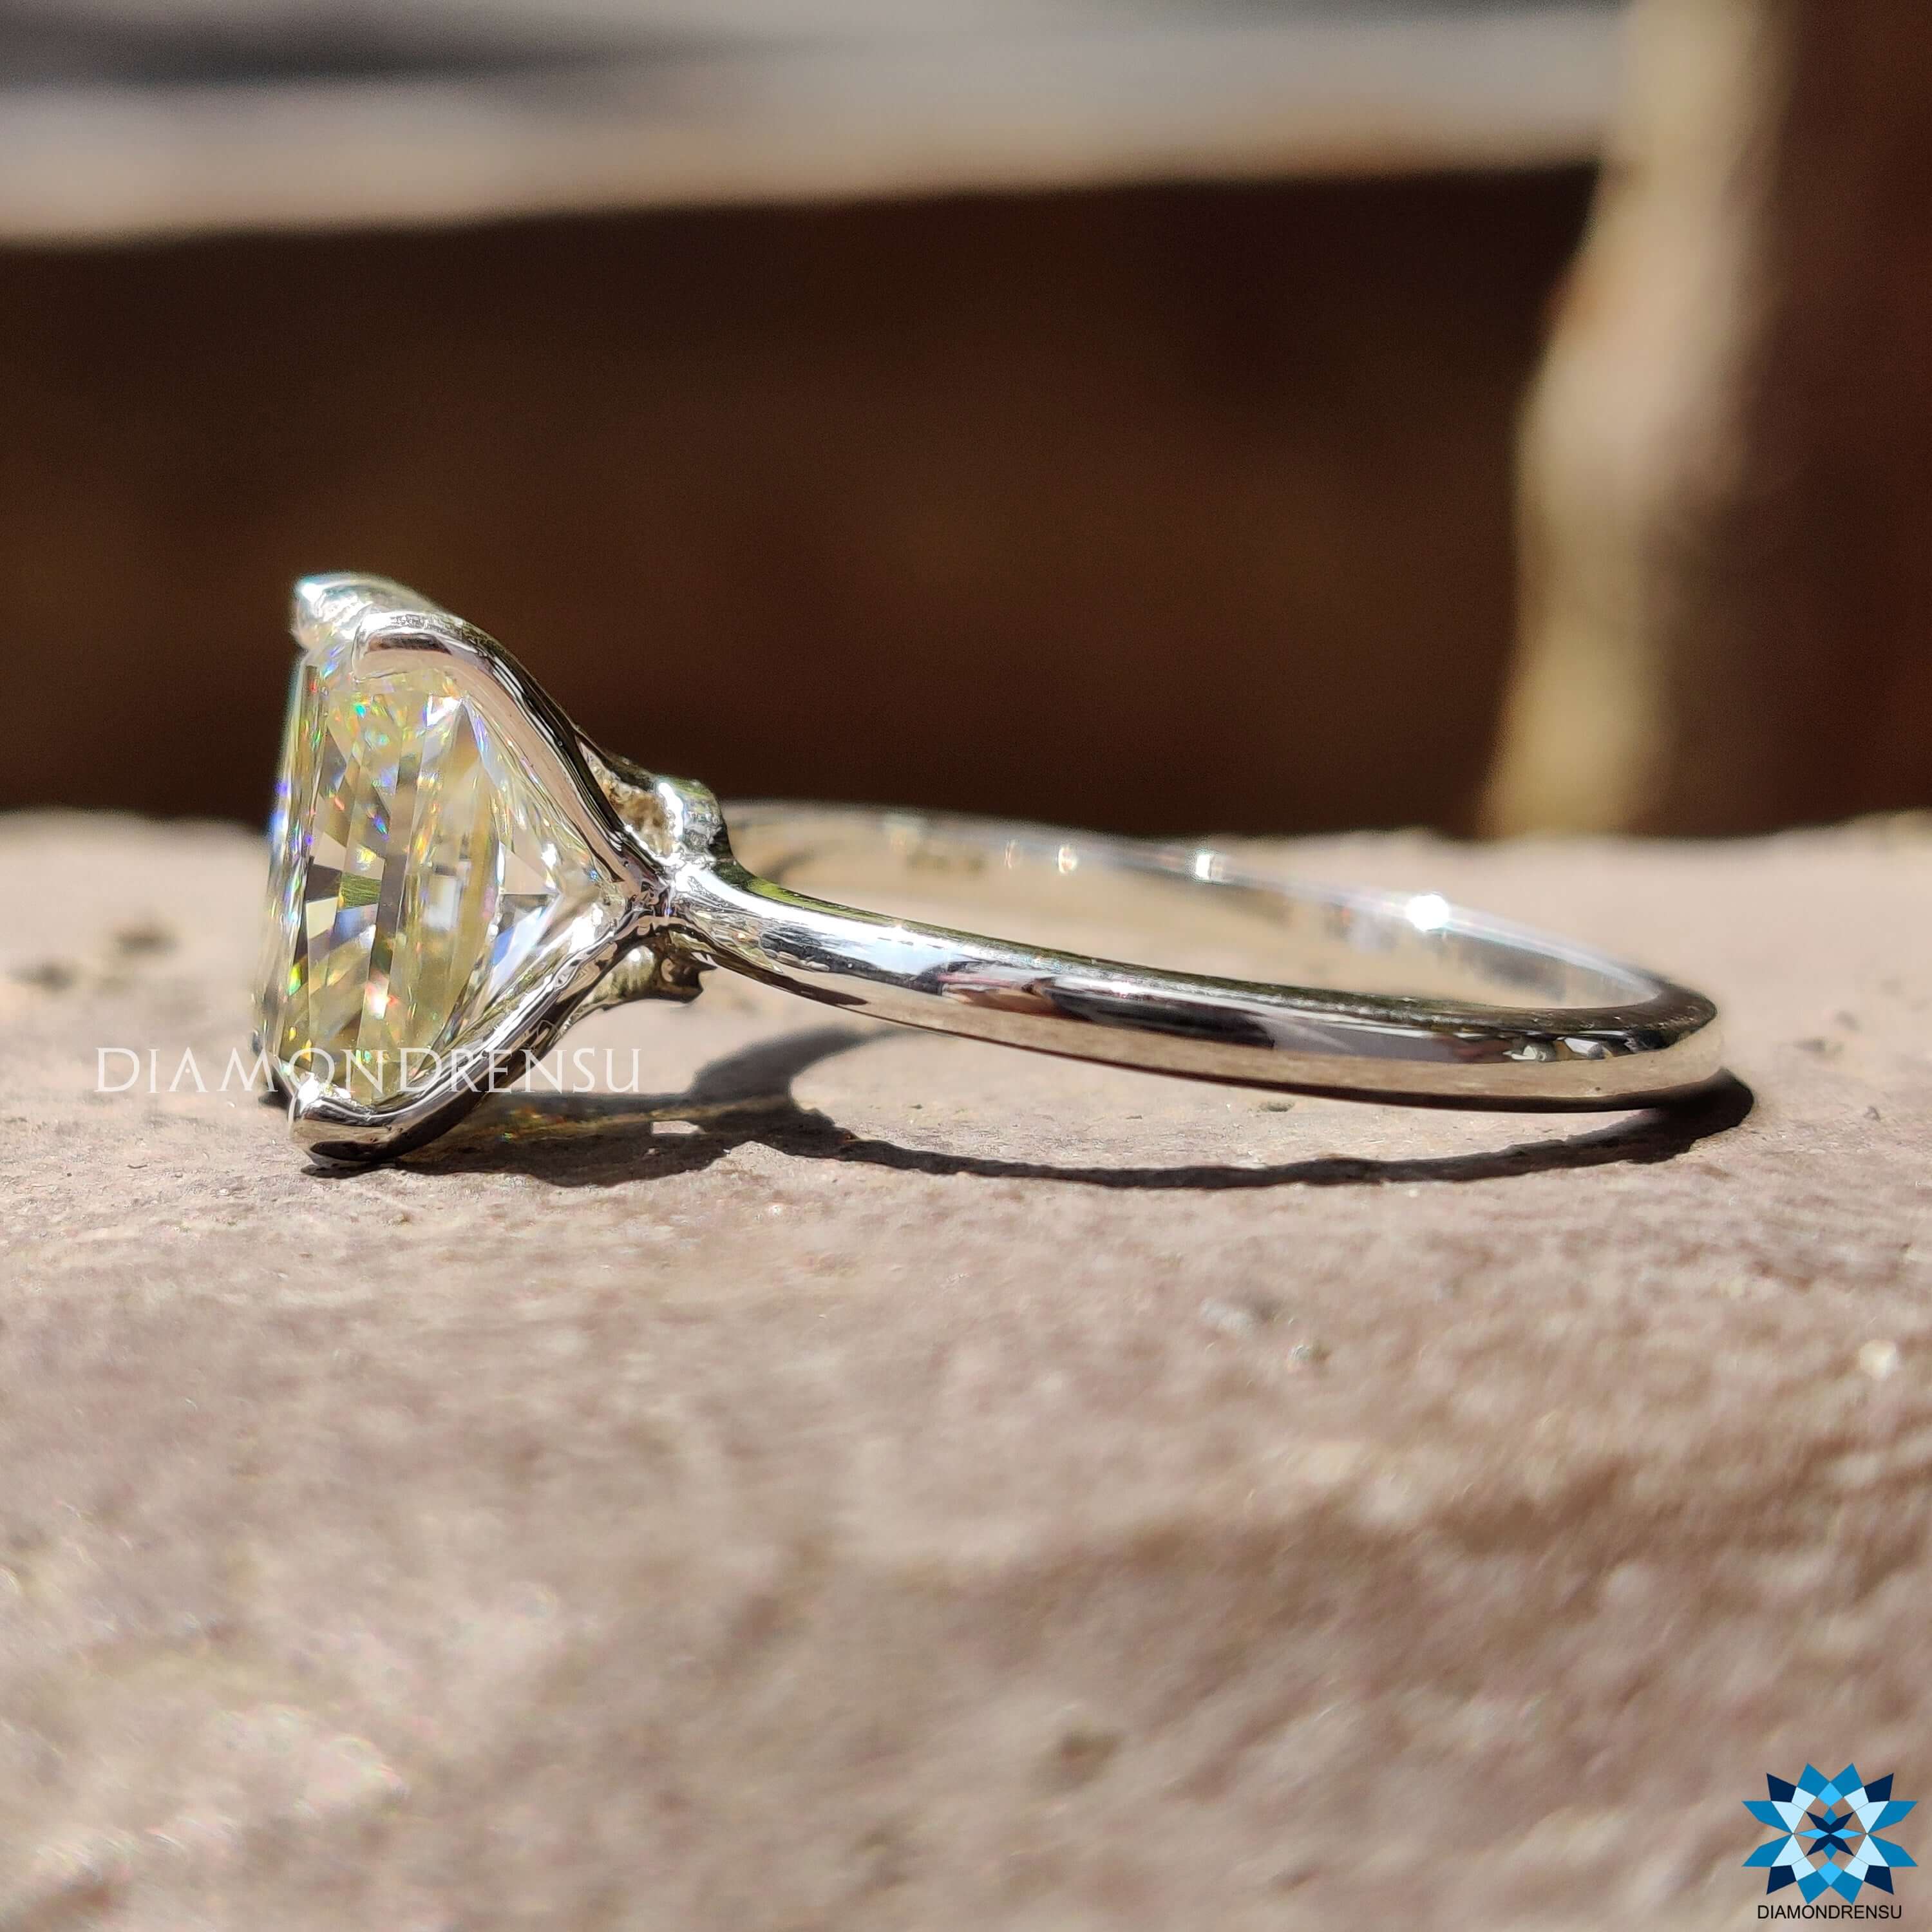 white gold ring - diamondrensu